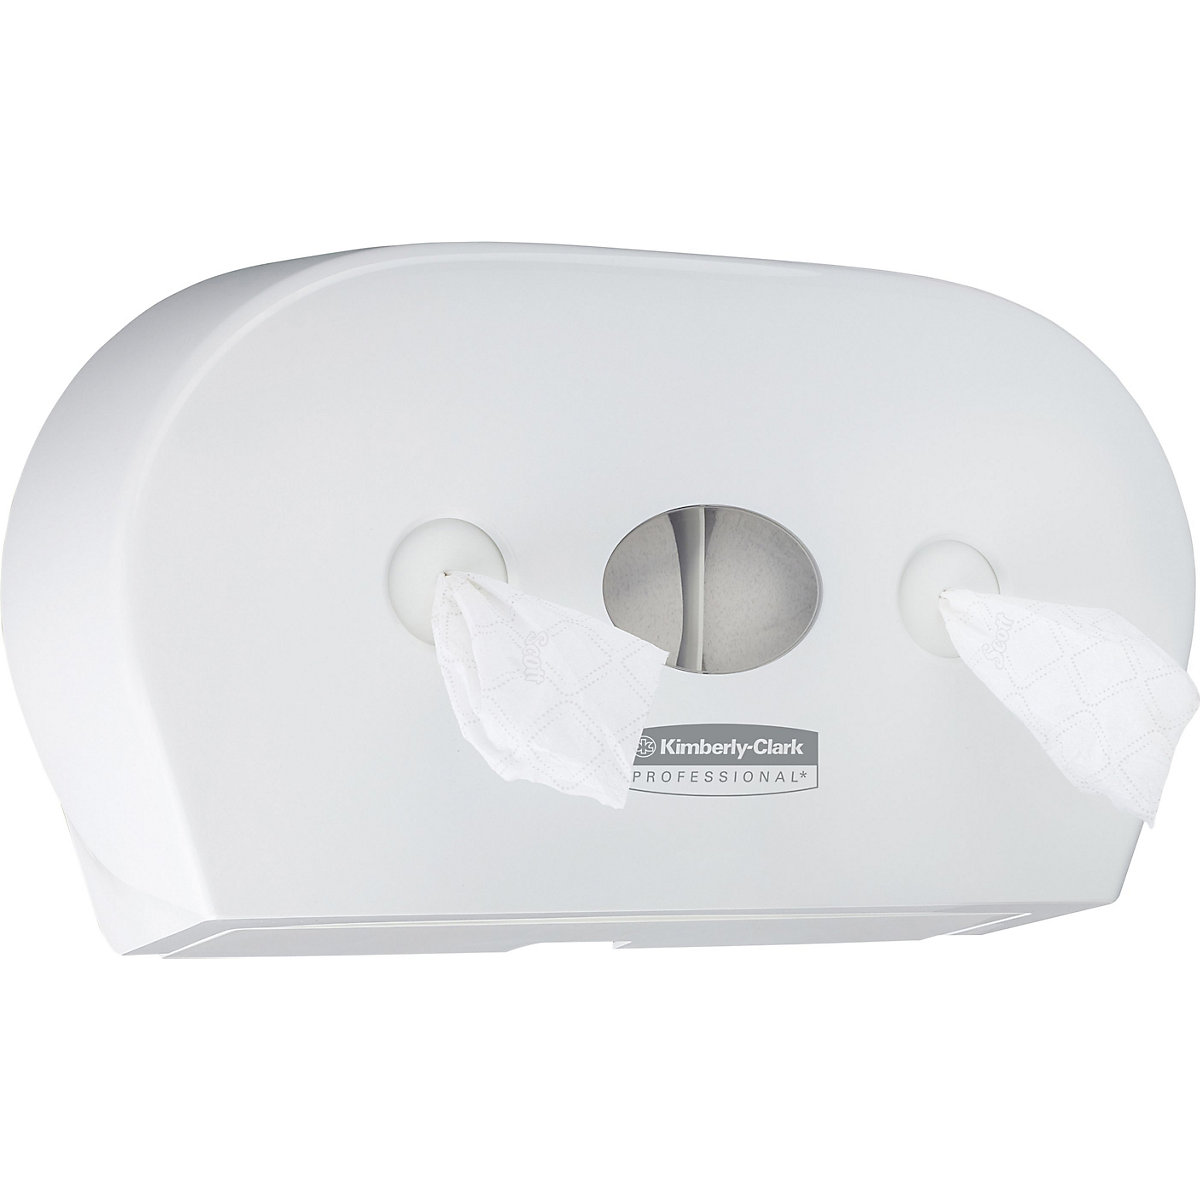 Scott® Control™ 7186 mini toilet paper dispenser – Kimberly-Clark